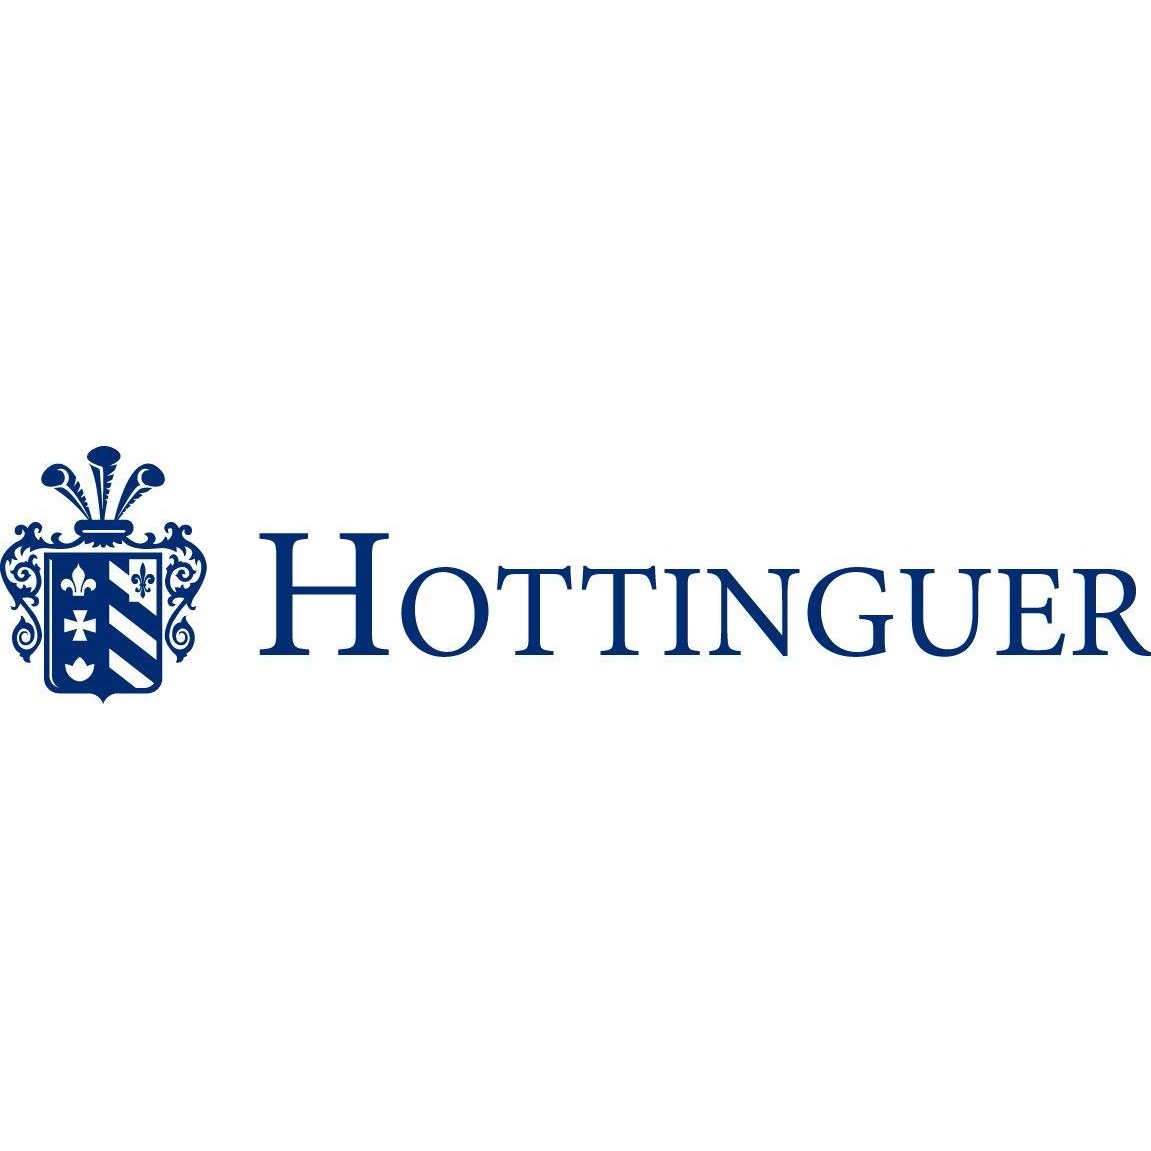 Banque Hottinguer